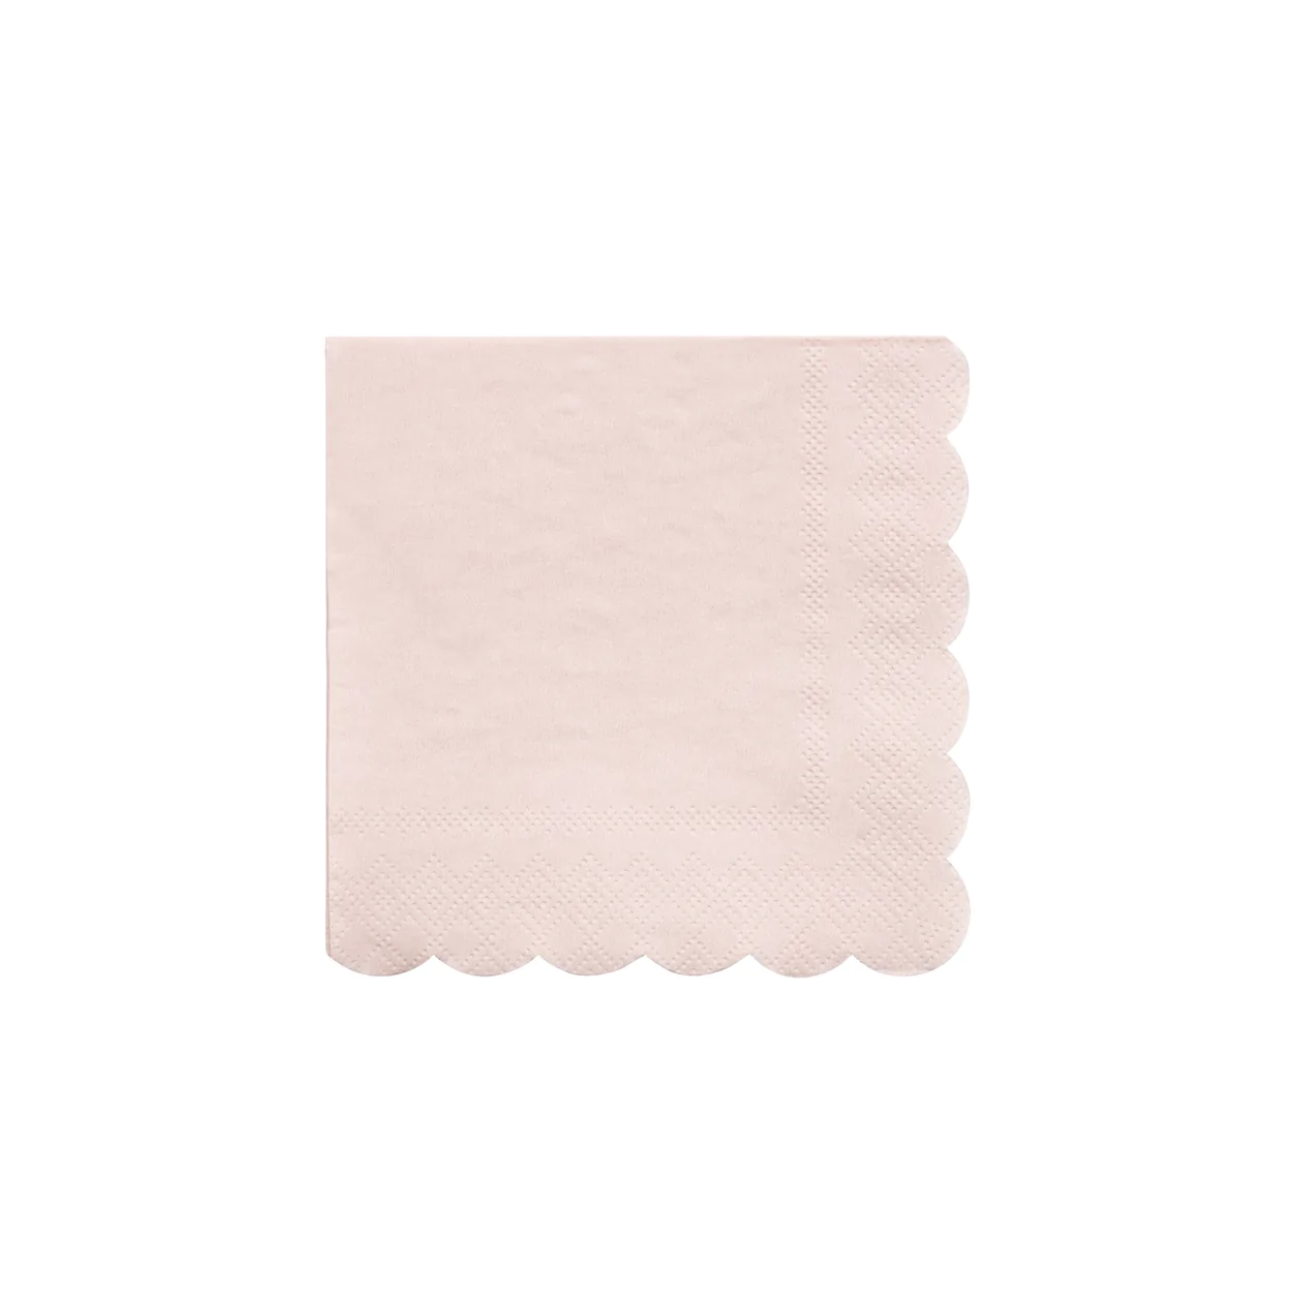 meri meri pale pink napkins, small